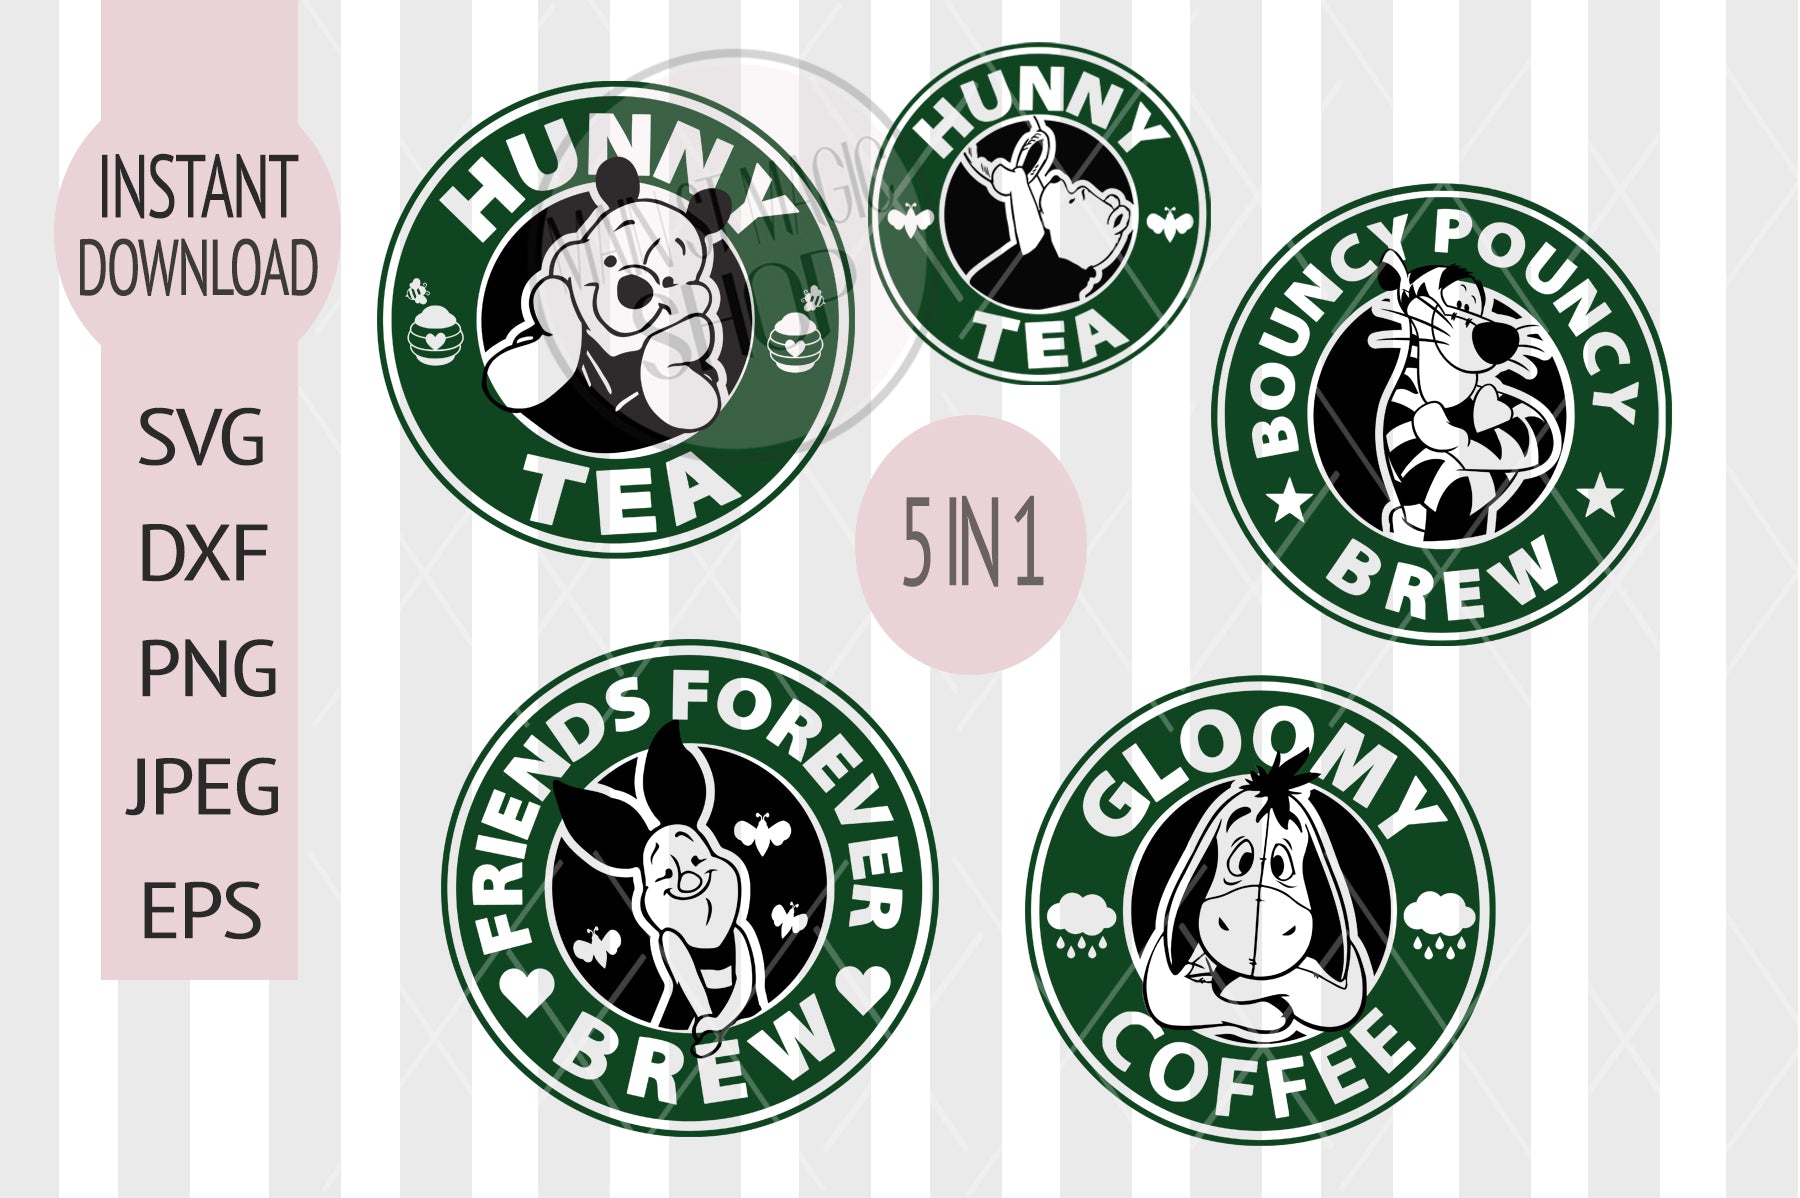 Starbucks Coffee clipart, Starbucks Logo SVG clipart, SVG cut